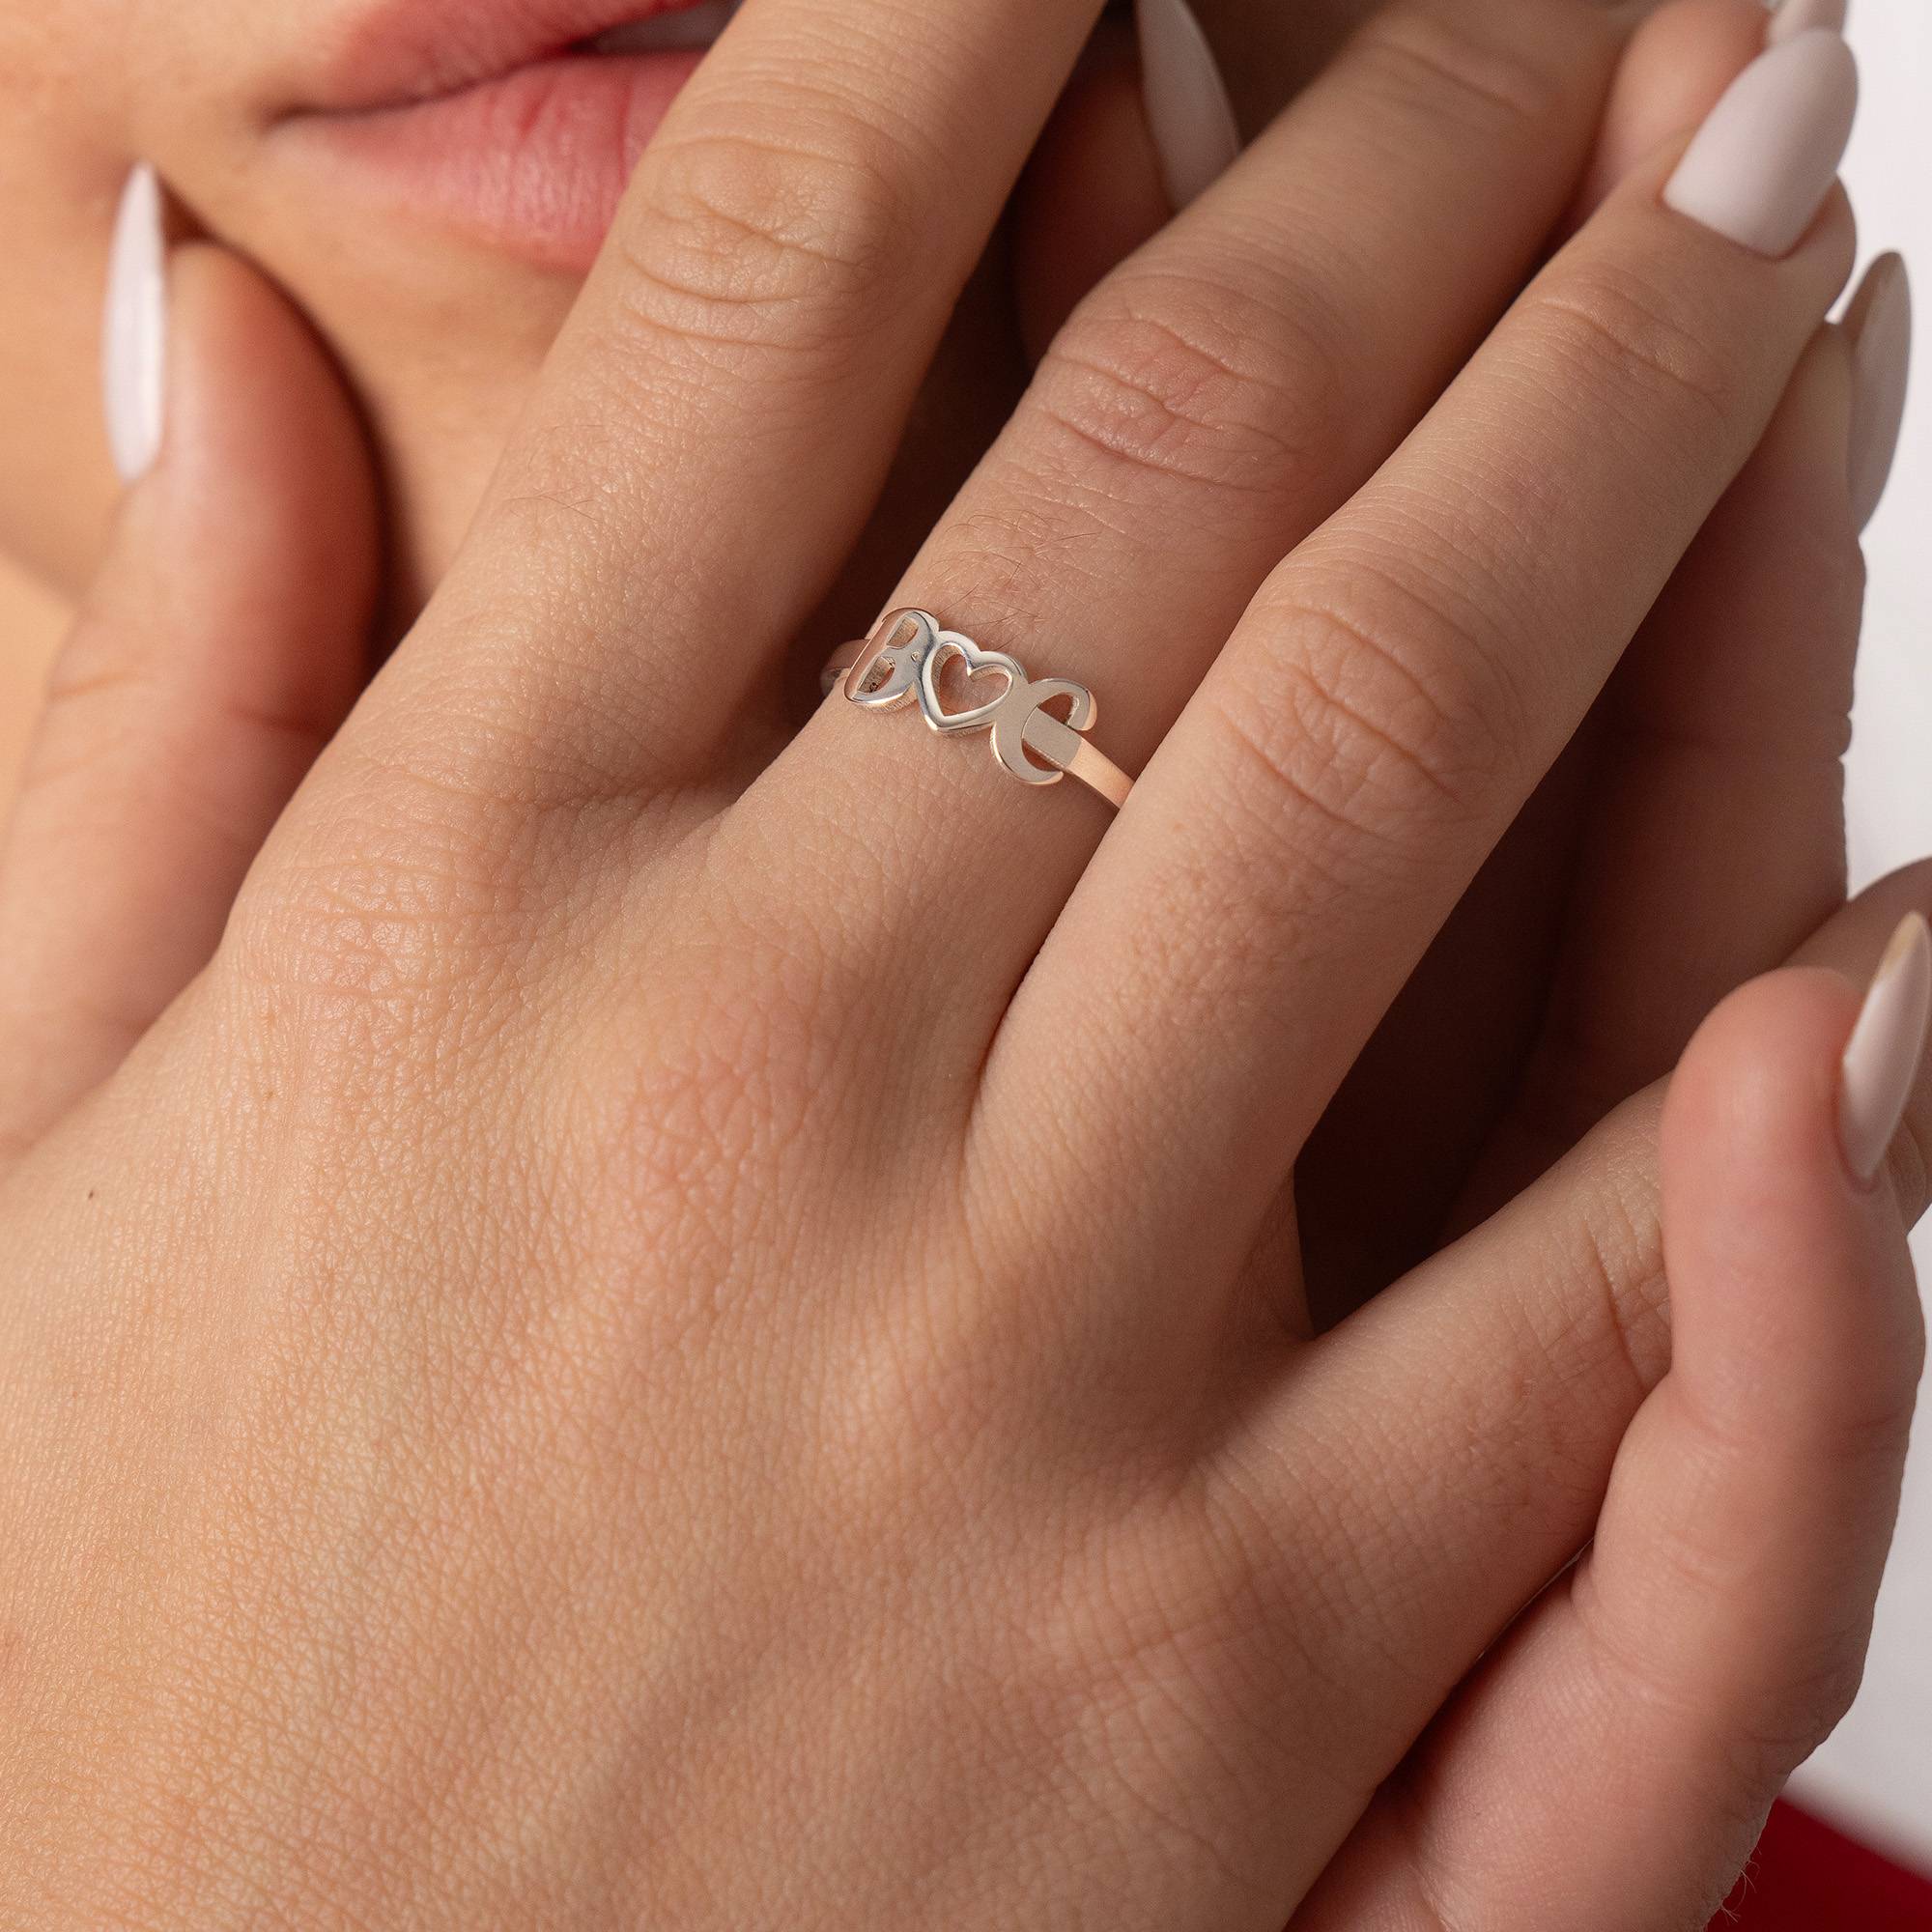 Ik Hou van Jou Initialen Ring in Sterling Zilver-2 Productfoto